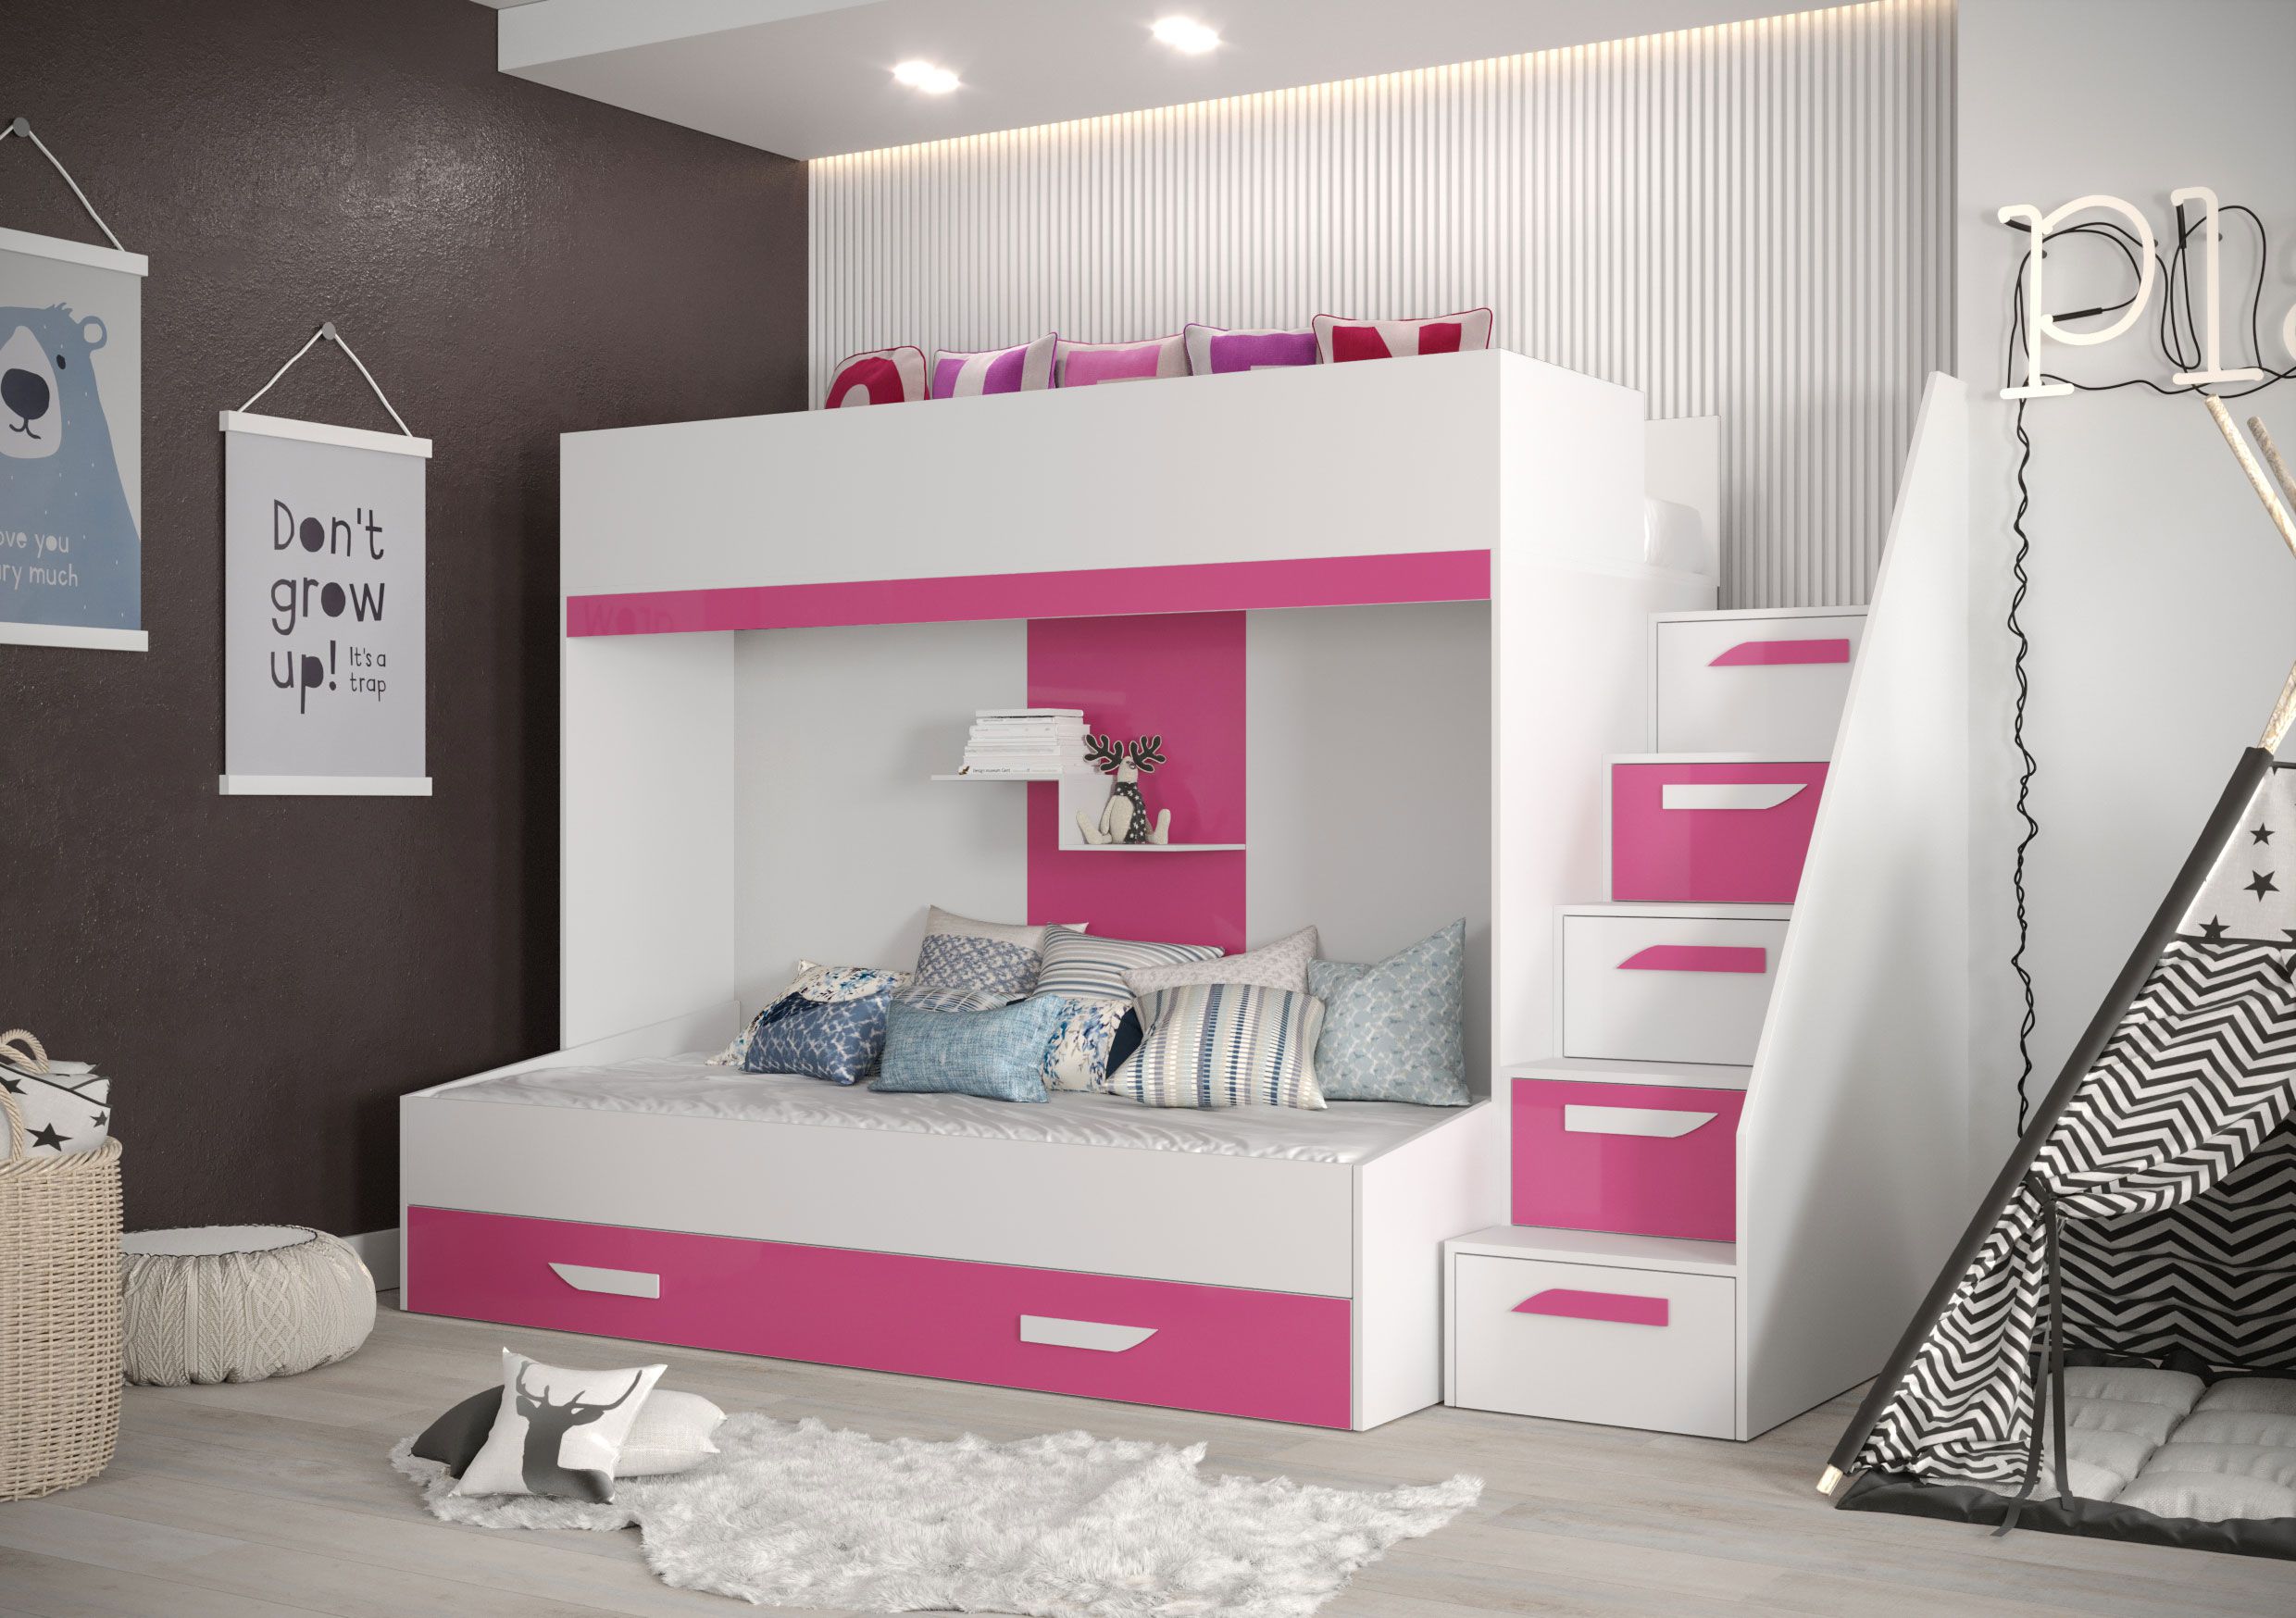 Funktionsbett / Kinderbett / Hochbett-Kombination mit drei Liegeflächen Jura 35, Farbe: Weiß / Pink - Abmessungen: 165 x 247 x 135 cm (H x B x T)